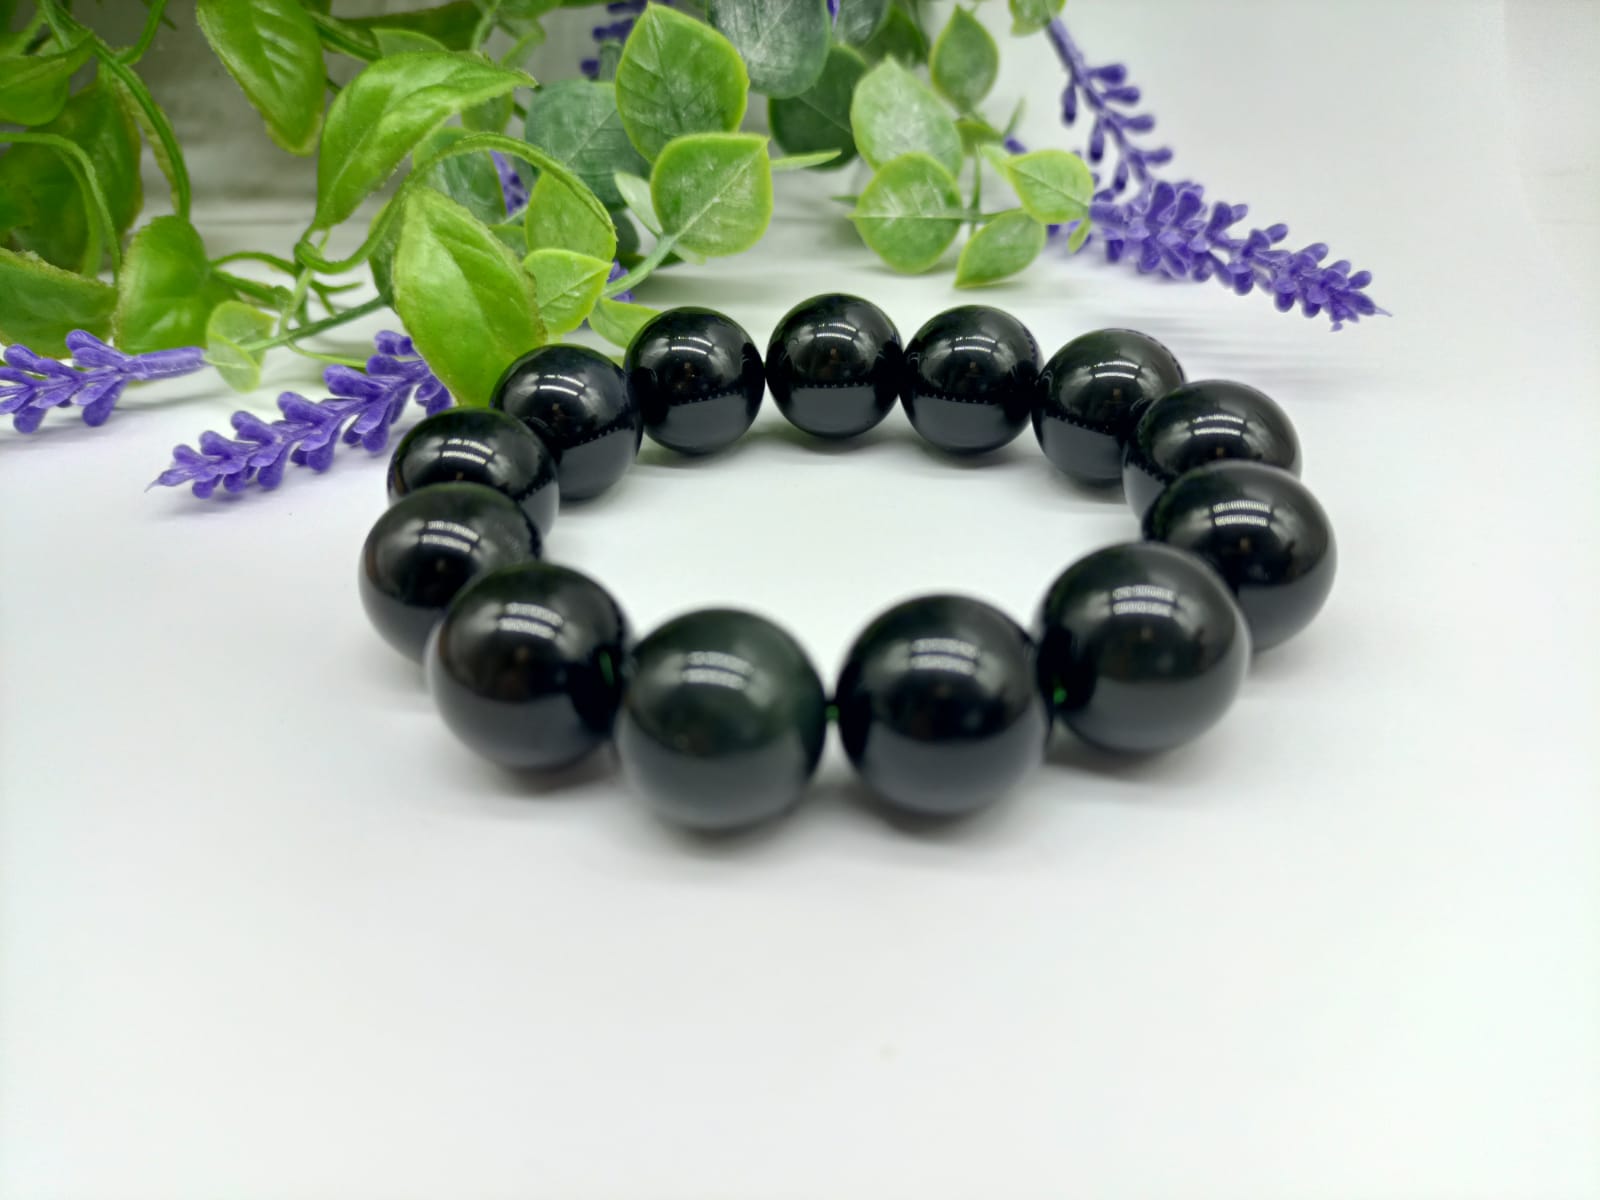 Rainbow Obsidian 16mm Beads Bracelet

